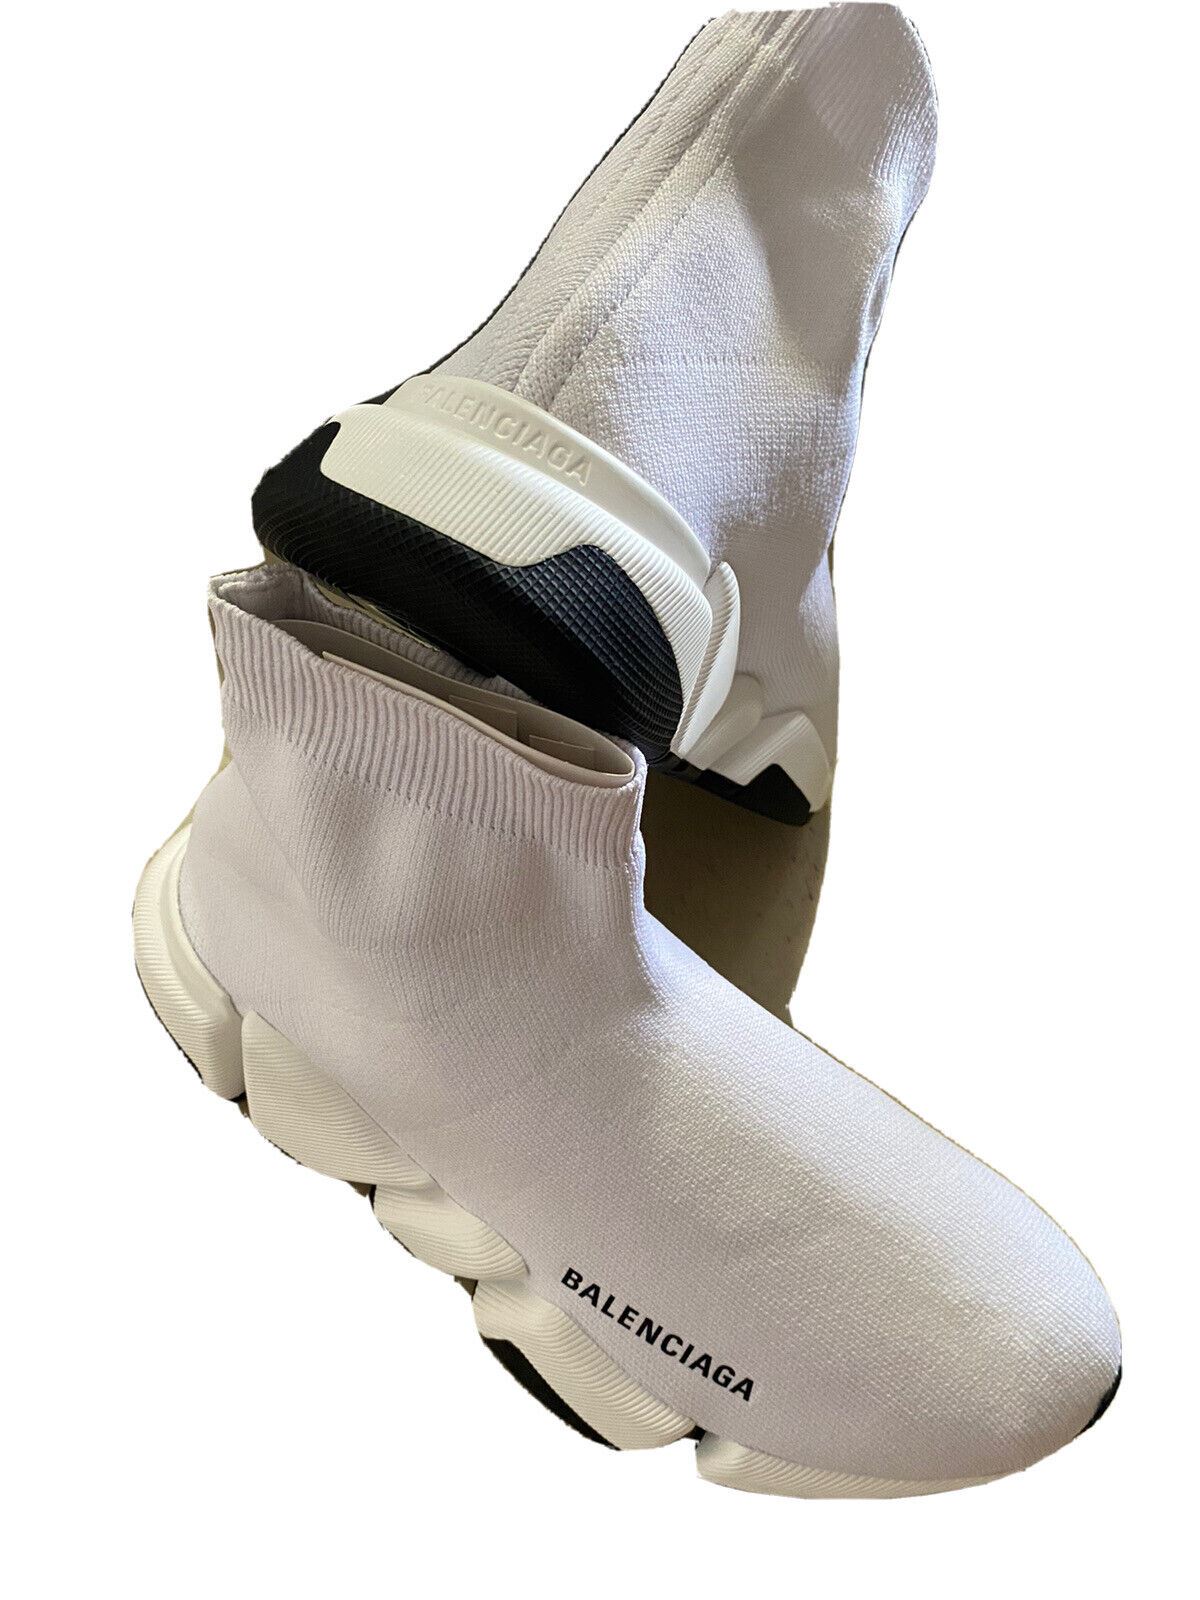 NIB $895 Balenciaga Women Speed 2.0 Lurex Sock Sneakers White/Black 10 US/40 Eu